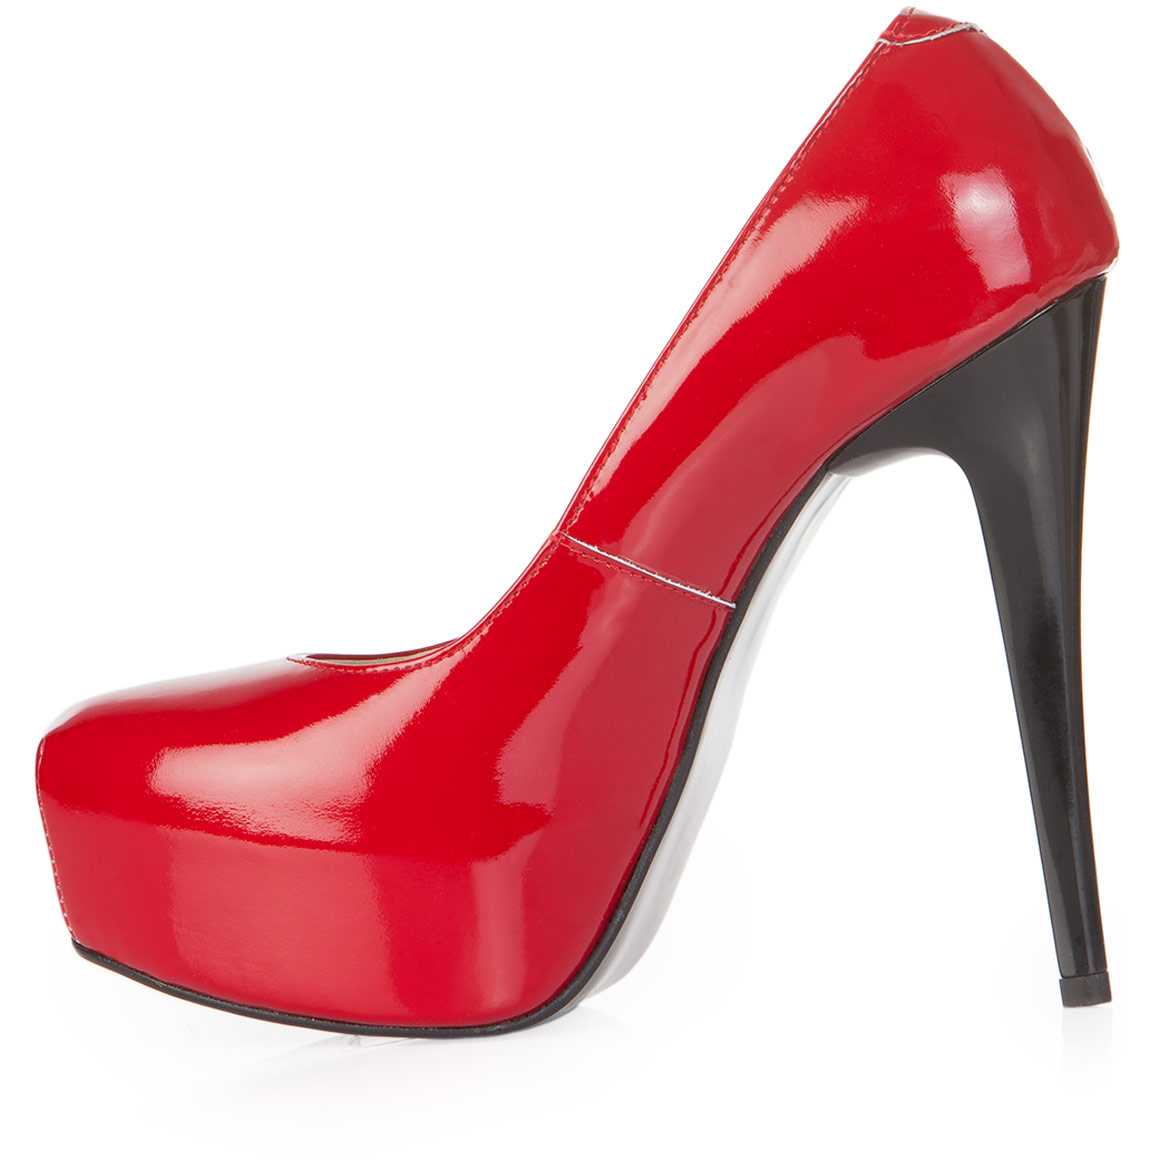 Insist instance Upset Reducere Pantofi rosii cu toc inalt din piele naturala model M203 Ama  Fashion